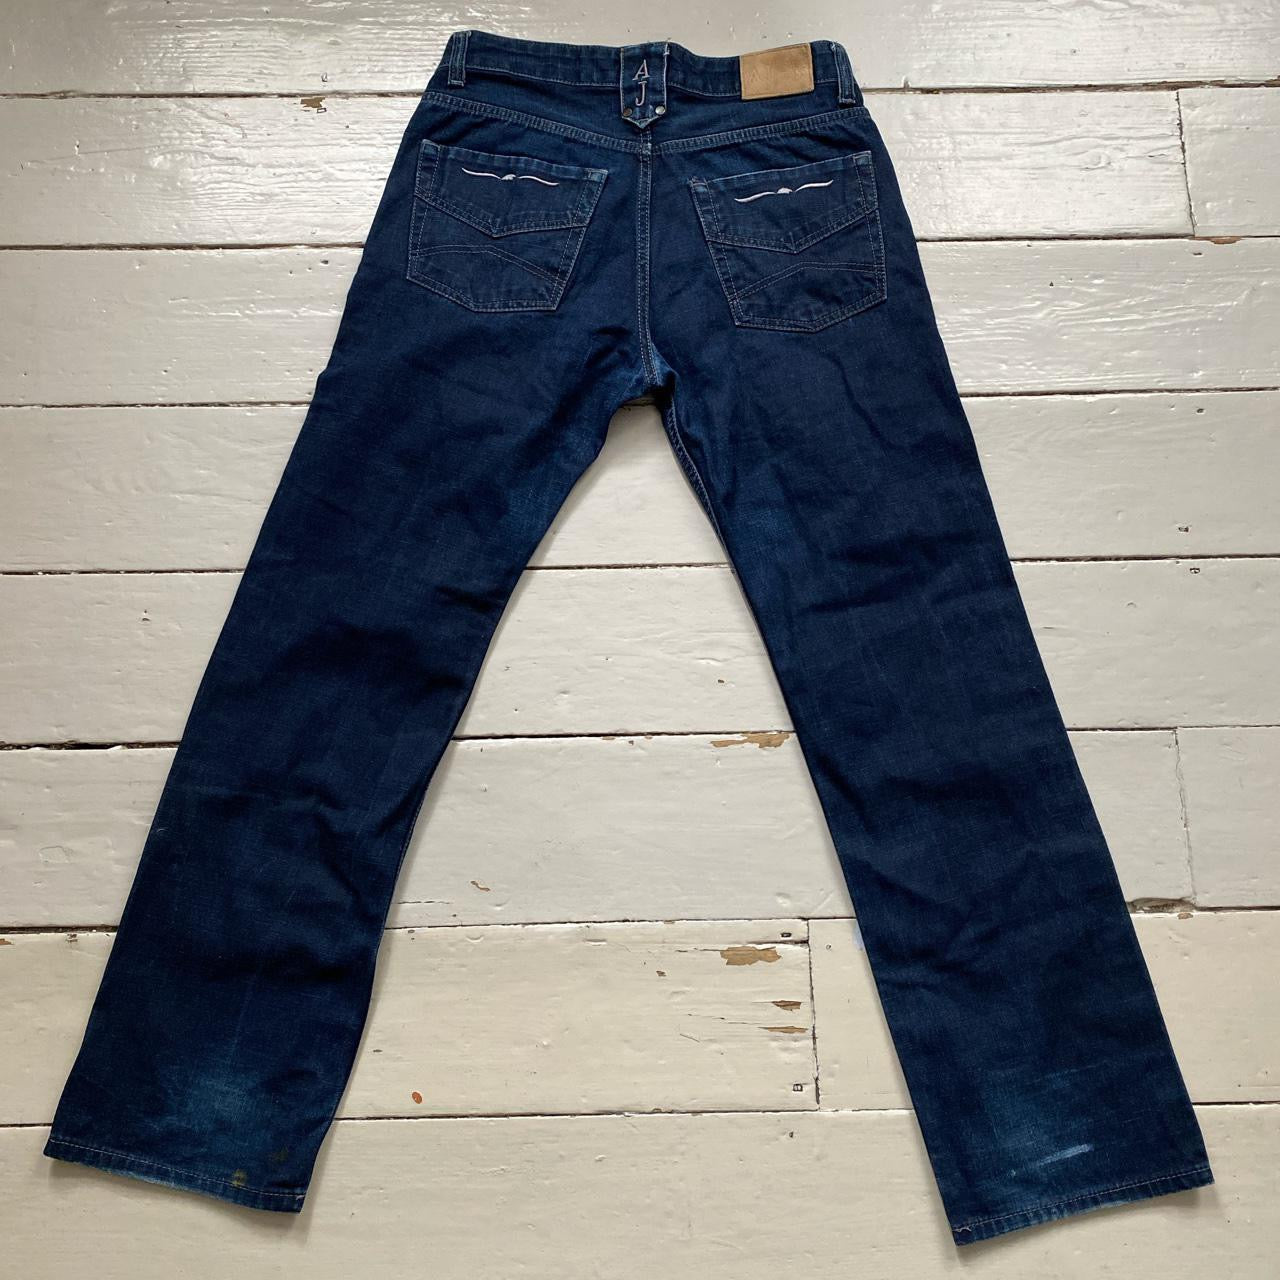 Armani AJ navy Jeans (34/31)